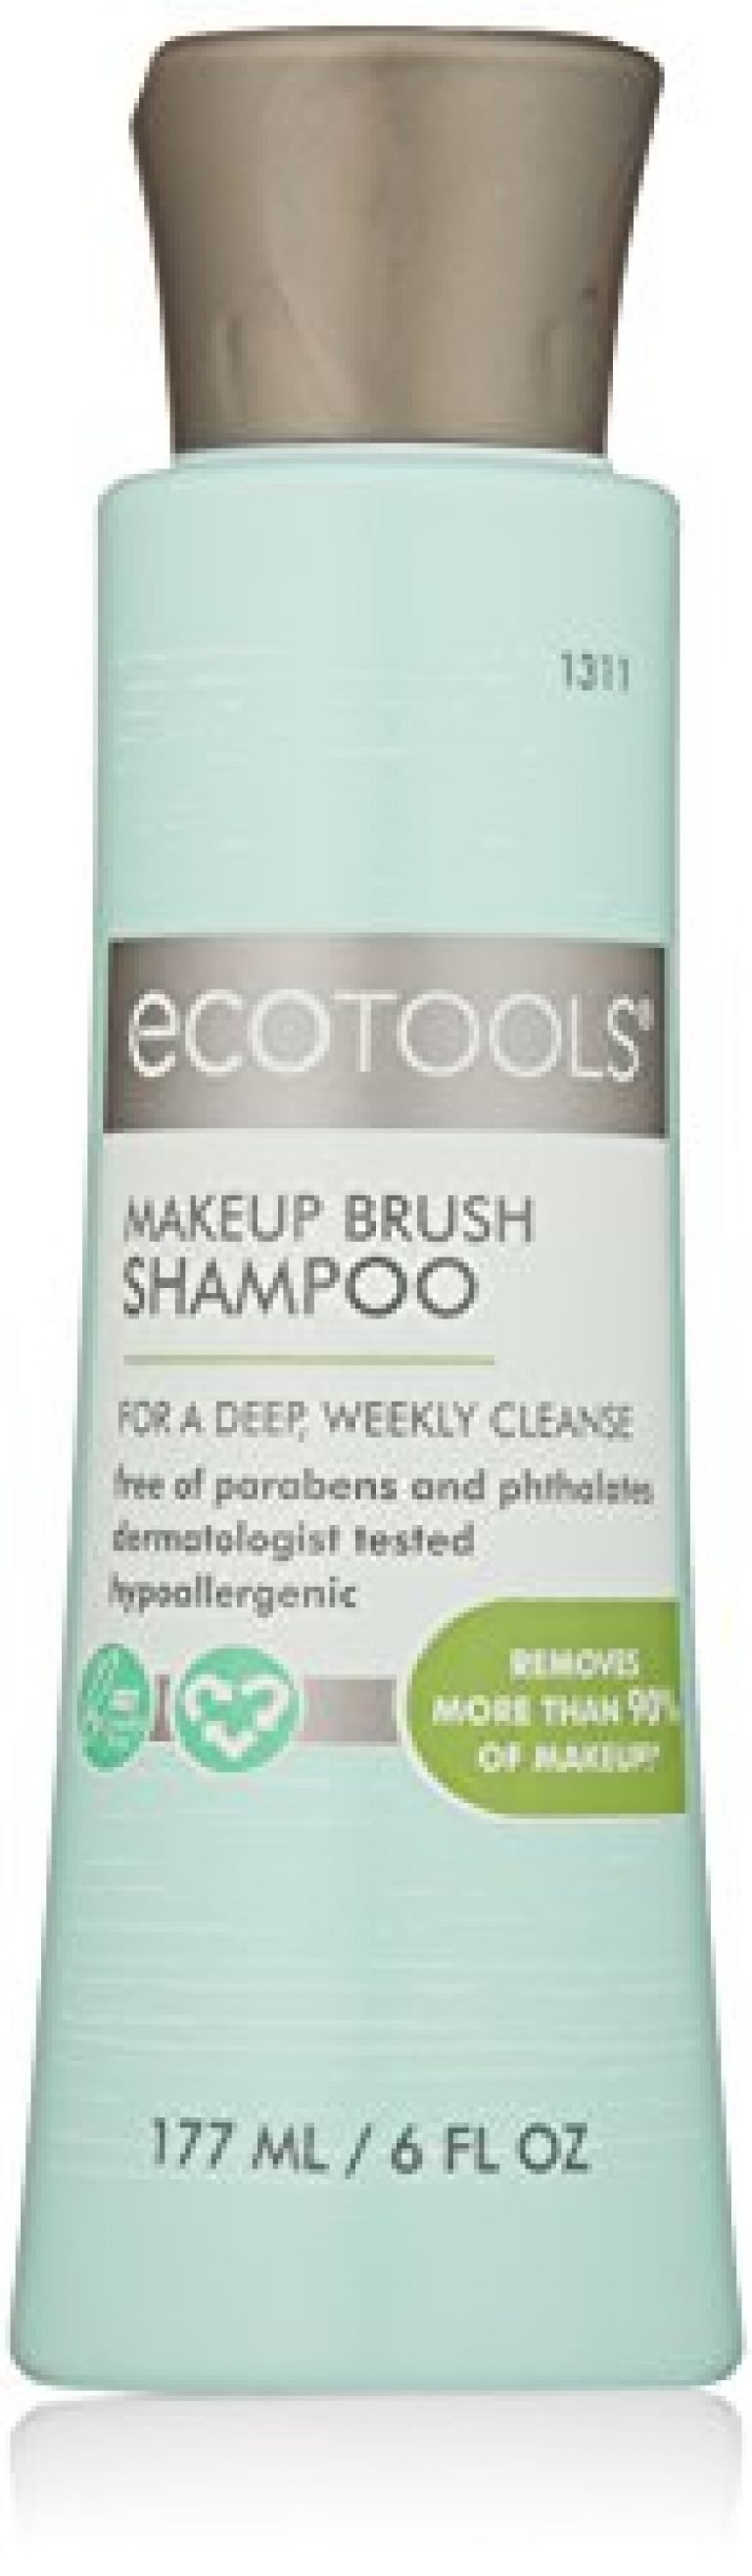 EcoTools Makeup Brush and Sponge Shampoo, Removes Makeup, Dirt, & Impurities From Makeup Brushes & Makeup Blending Sponges, Fragrance-Free, Vegan, & Cruelty-Free, 6 fl.oz./ 177 ml, 1 Count 2